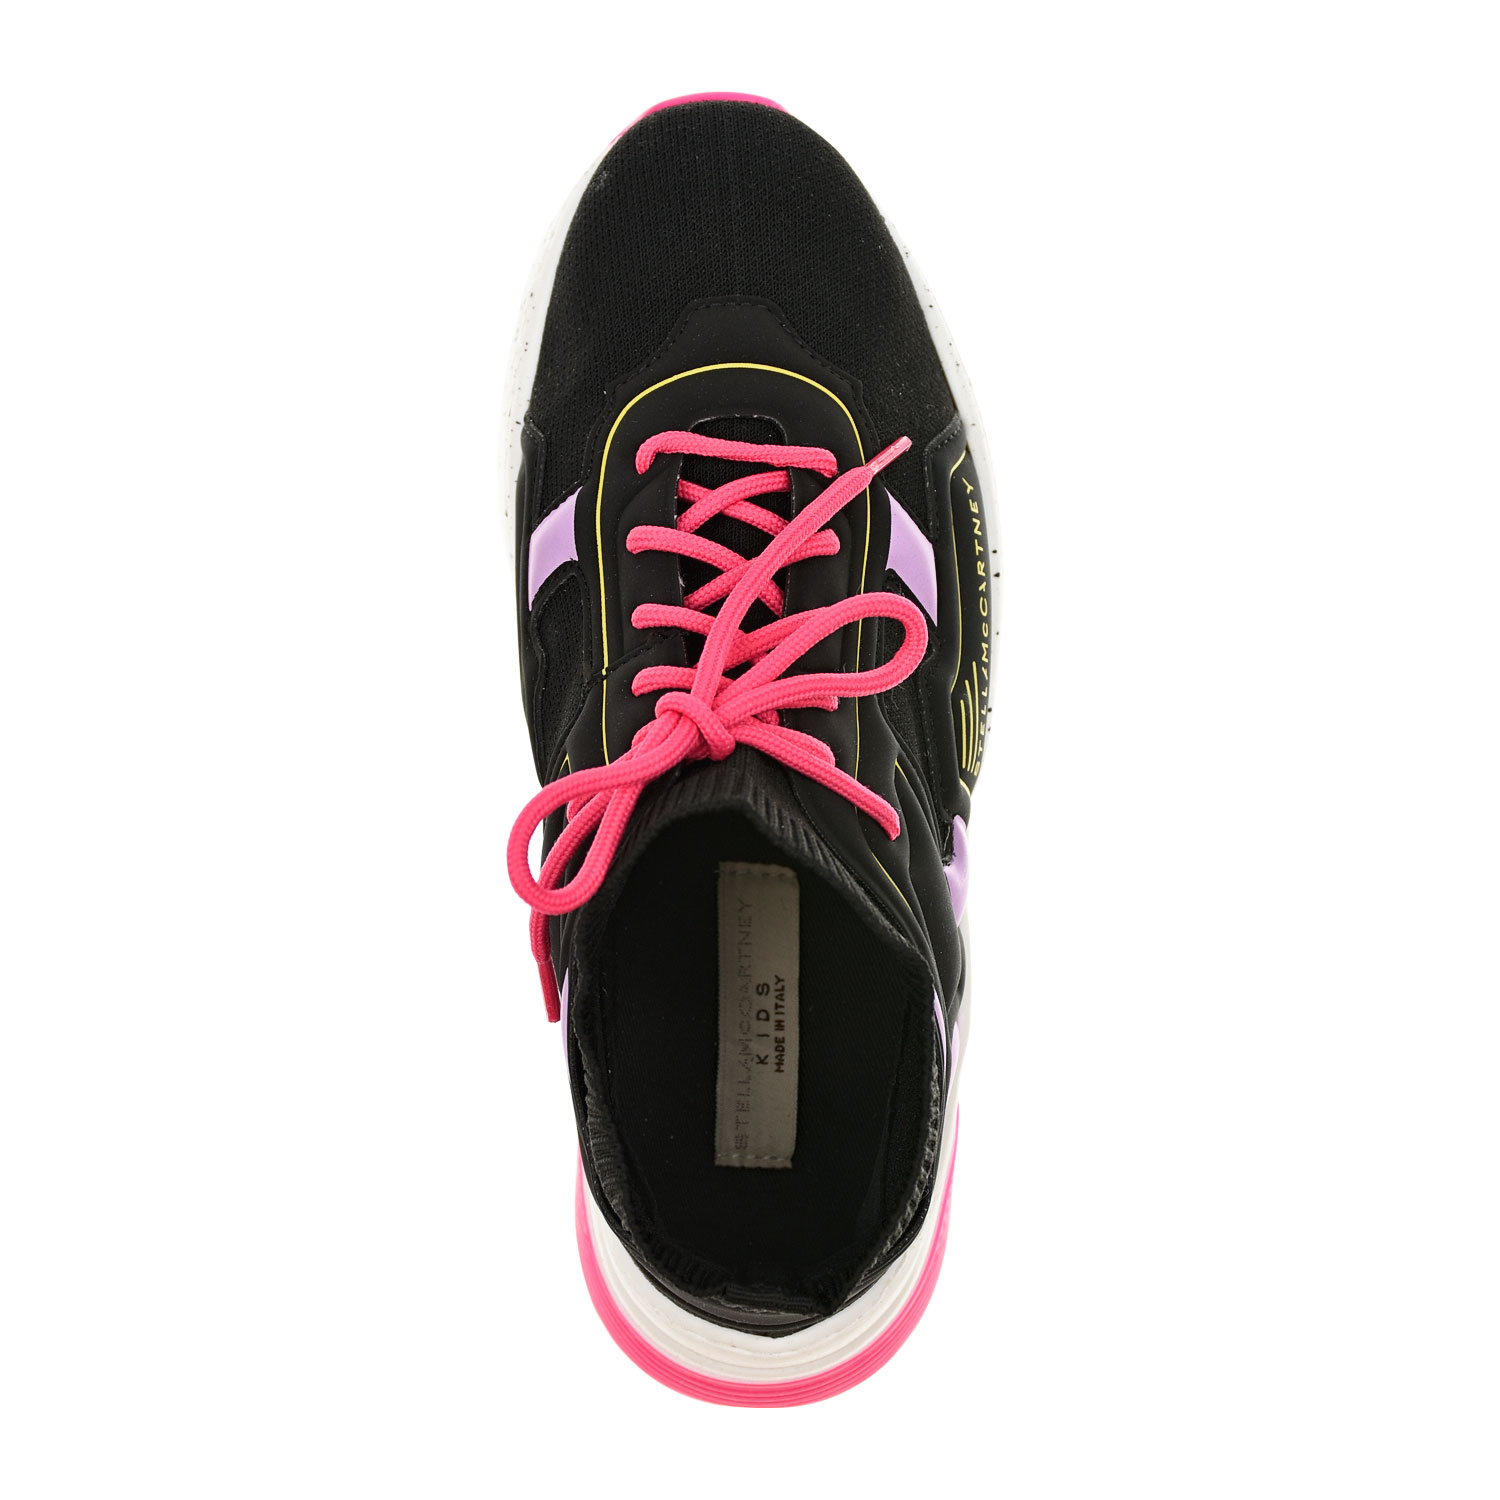 Черные кроссовки-носки со шнурками цвета фуксии Stella McCartney детские, размер 36 - фото 4